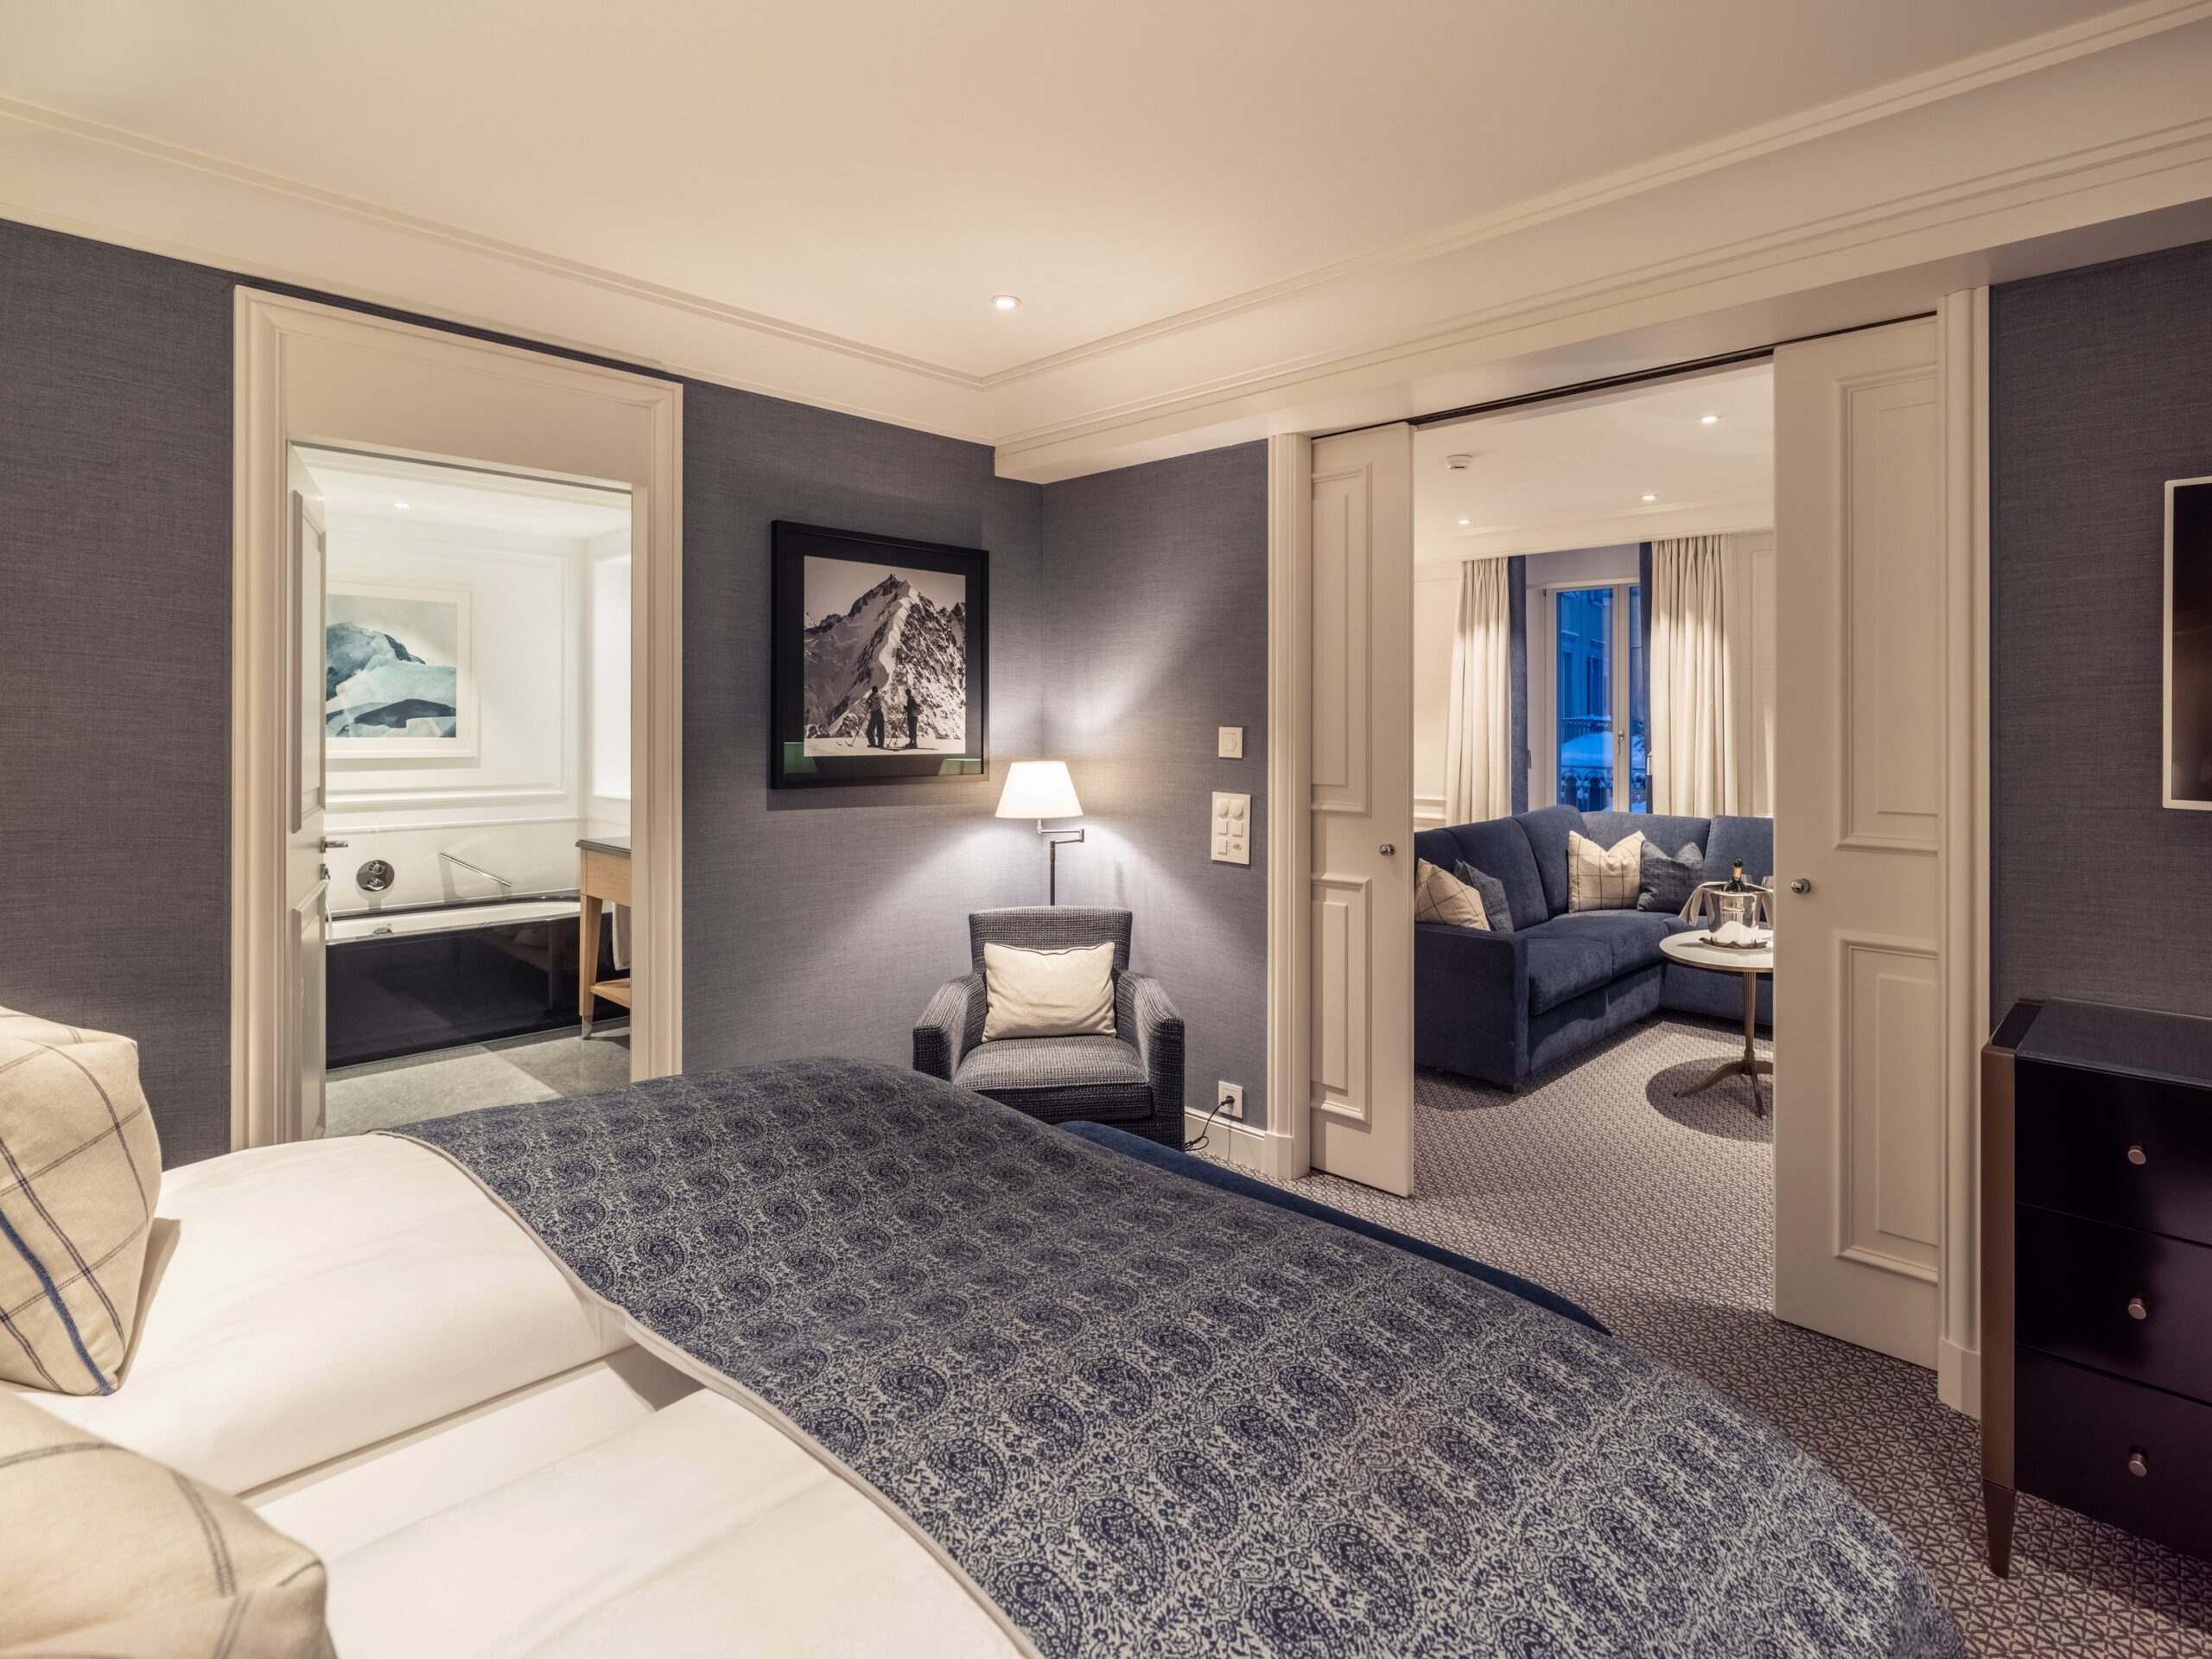 luxury hotel room in blue